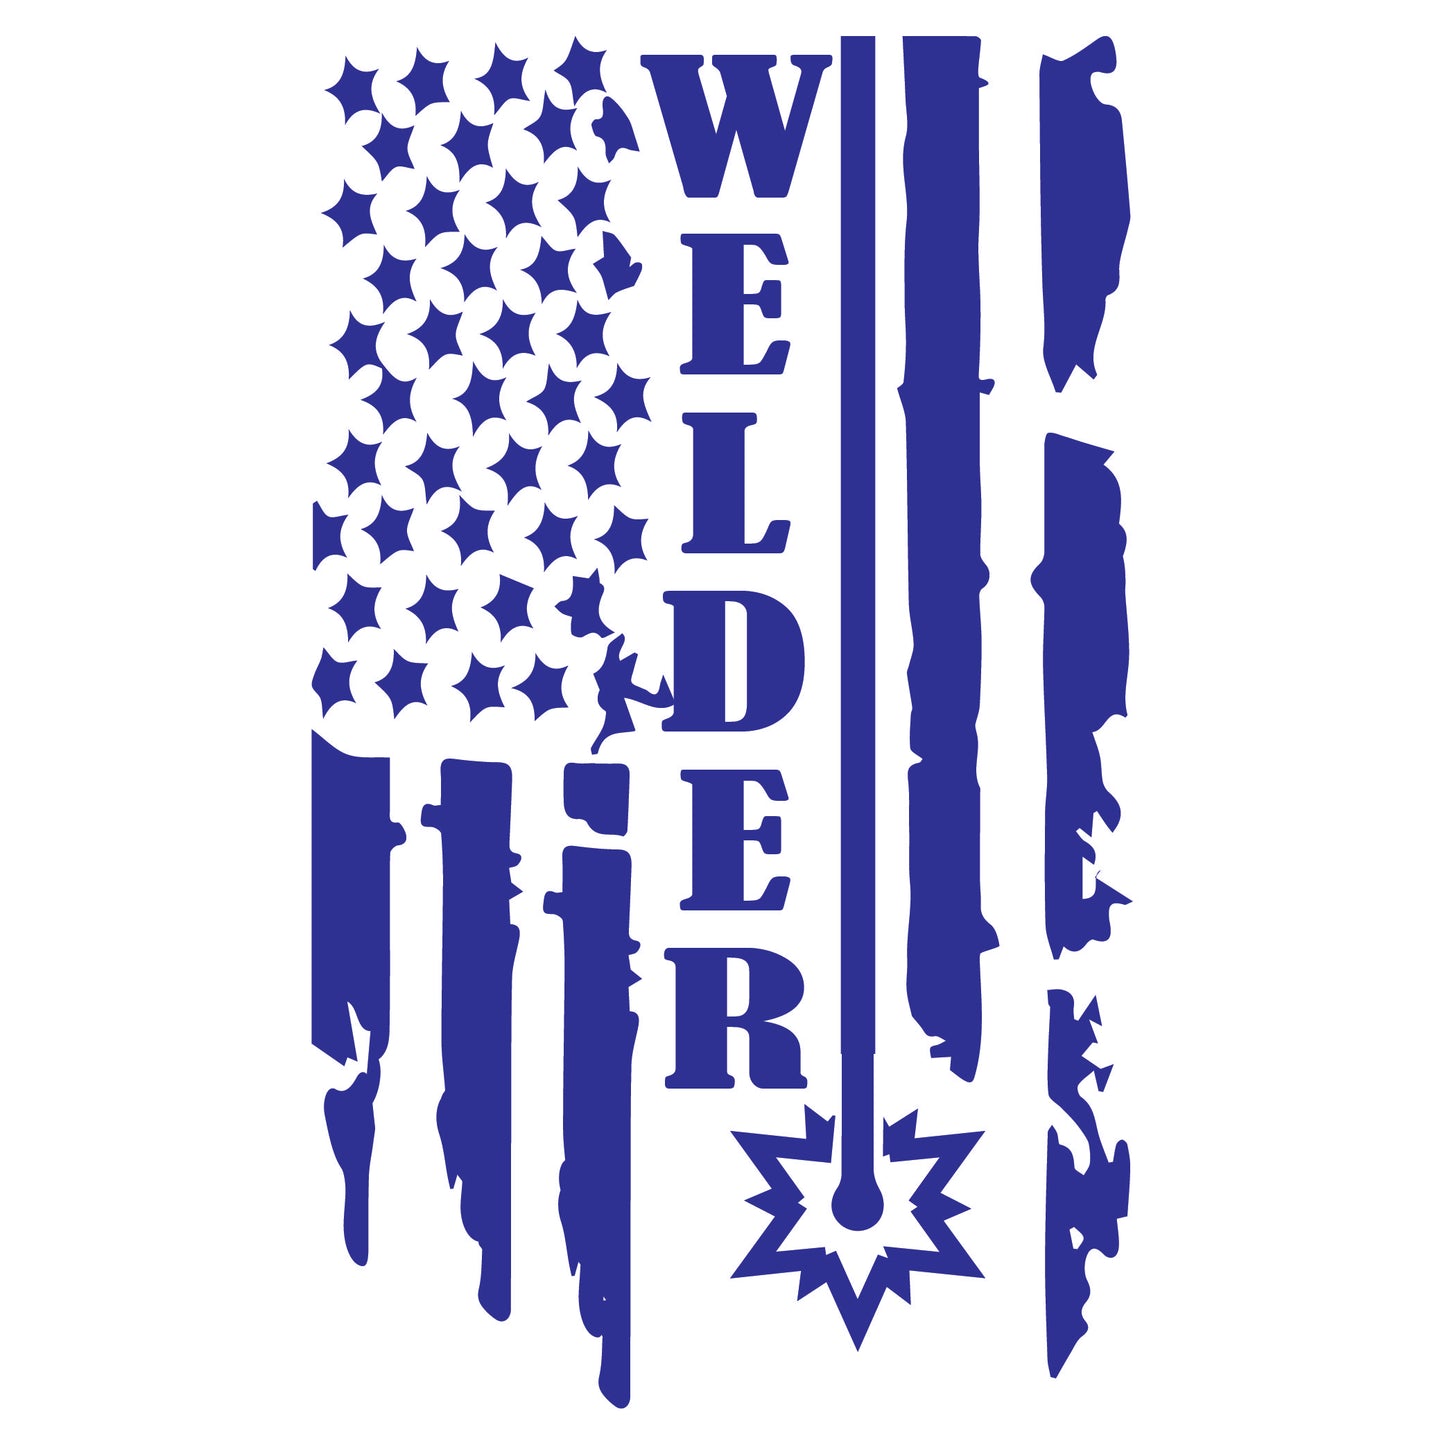 WELDER LIFE USA FLAG DECAL DESIGN BY SHOP VINYL DESIGN